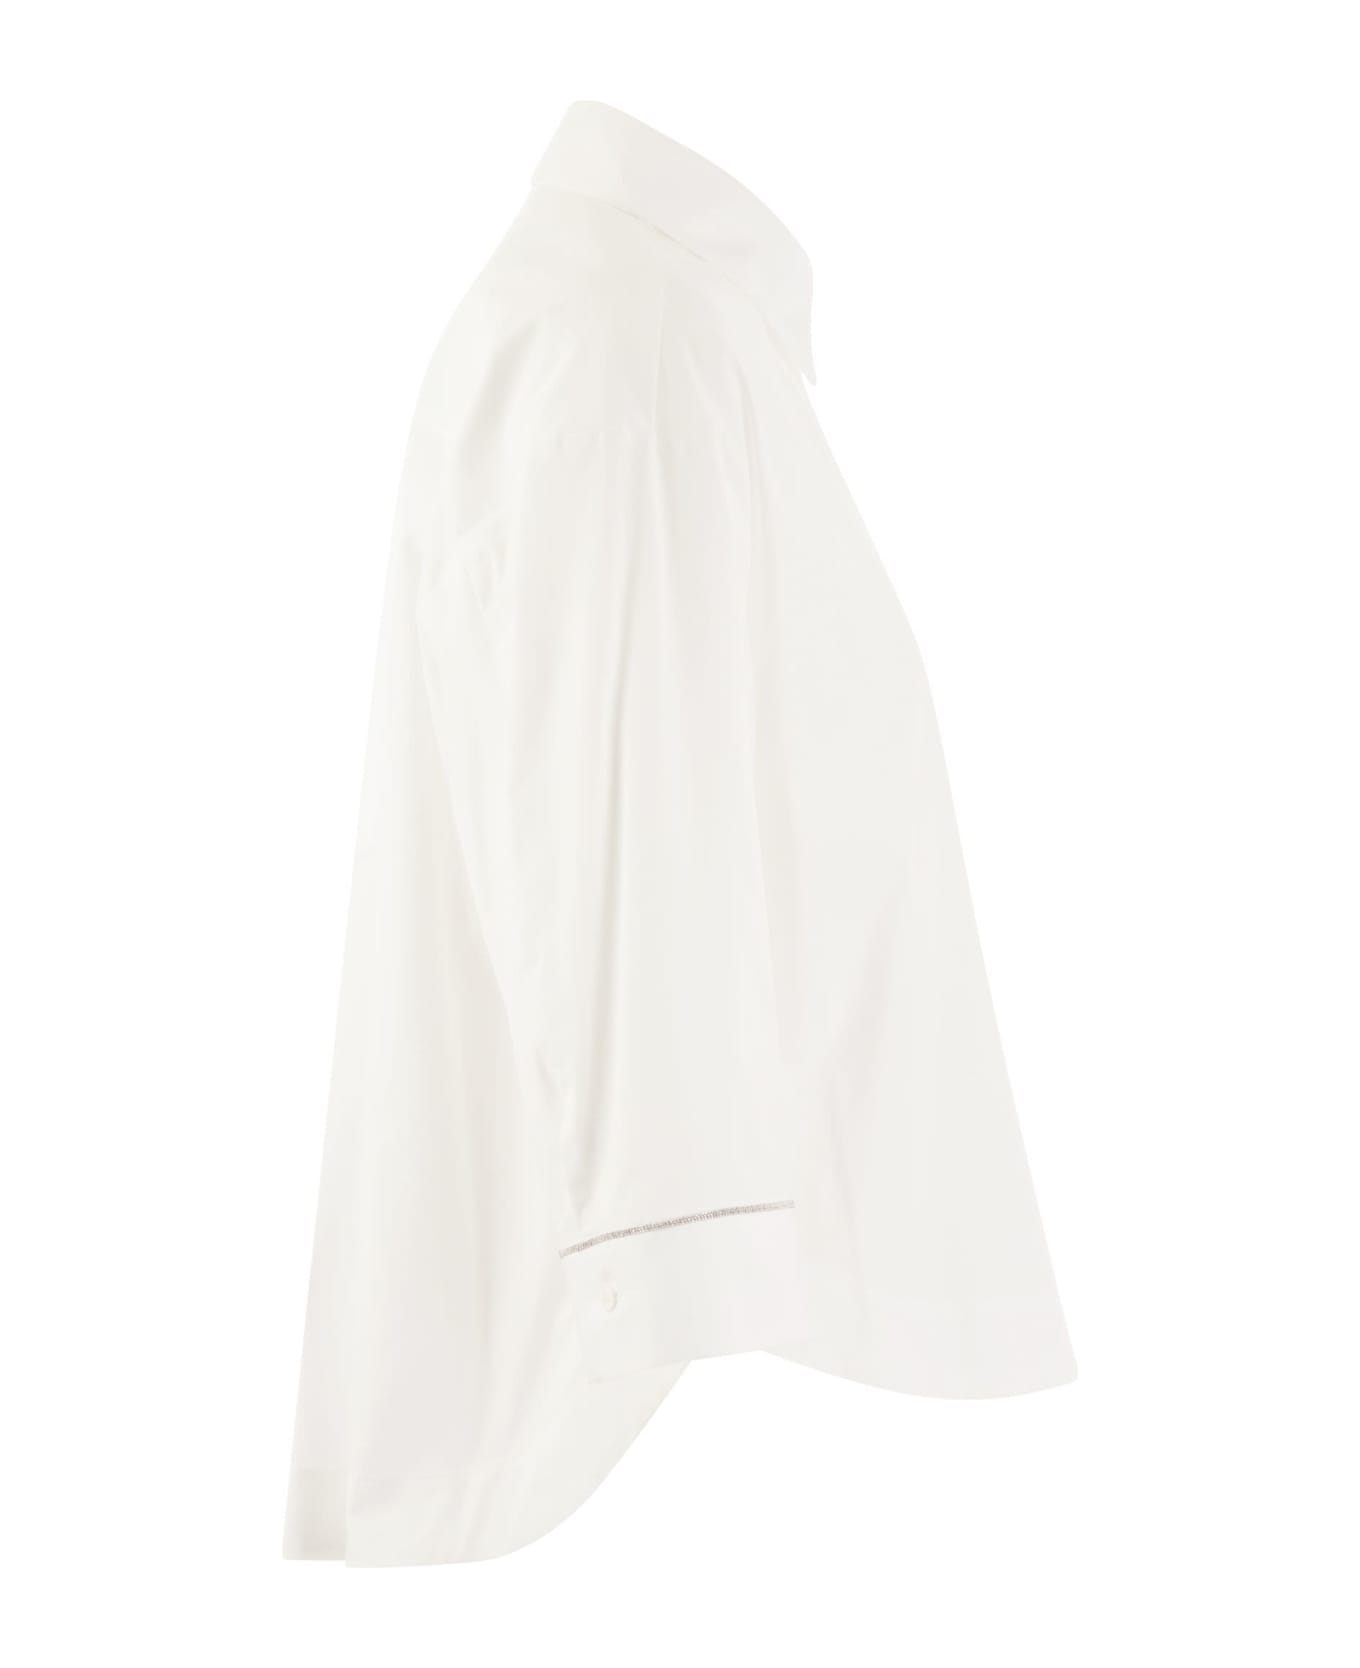 Peserico Plain Cotton Poplin Shirt - White